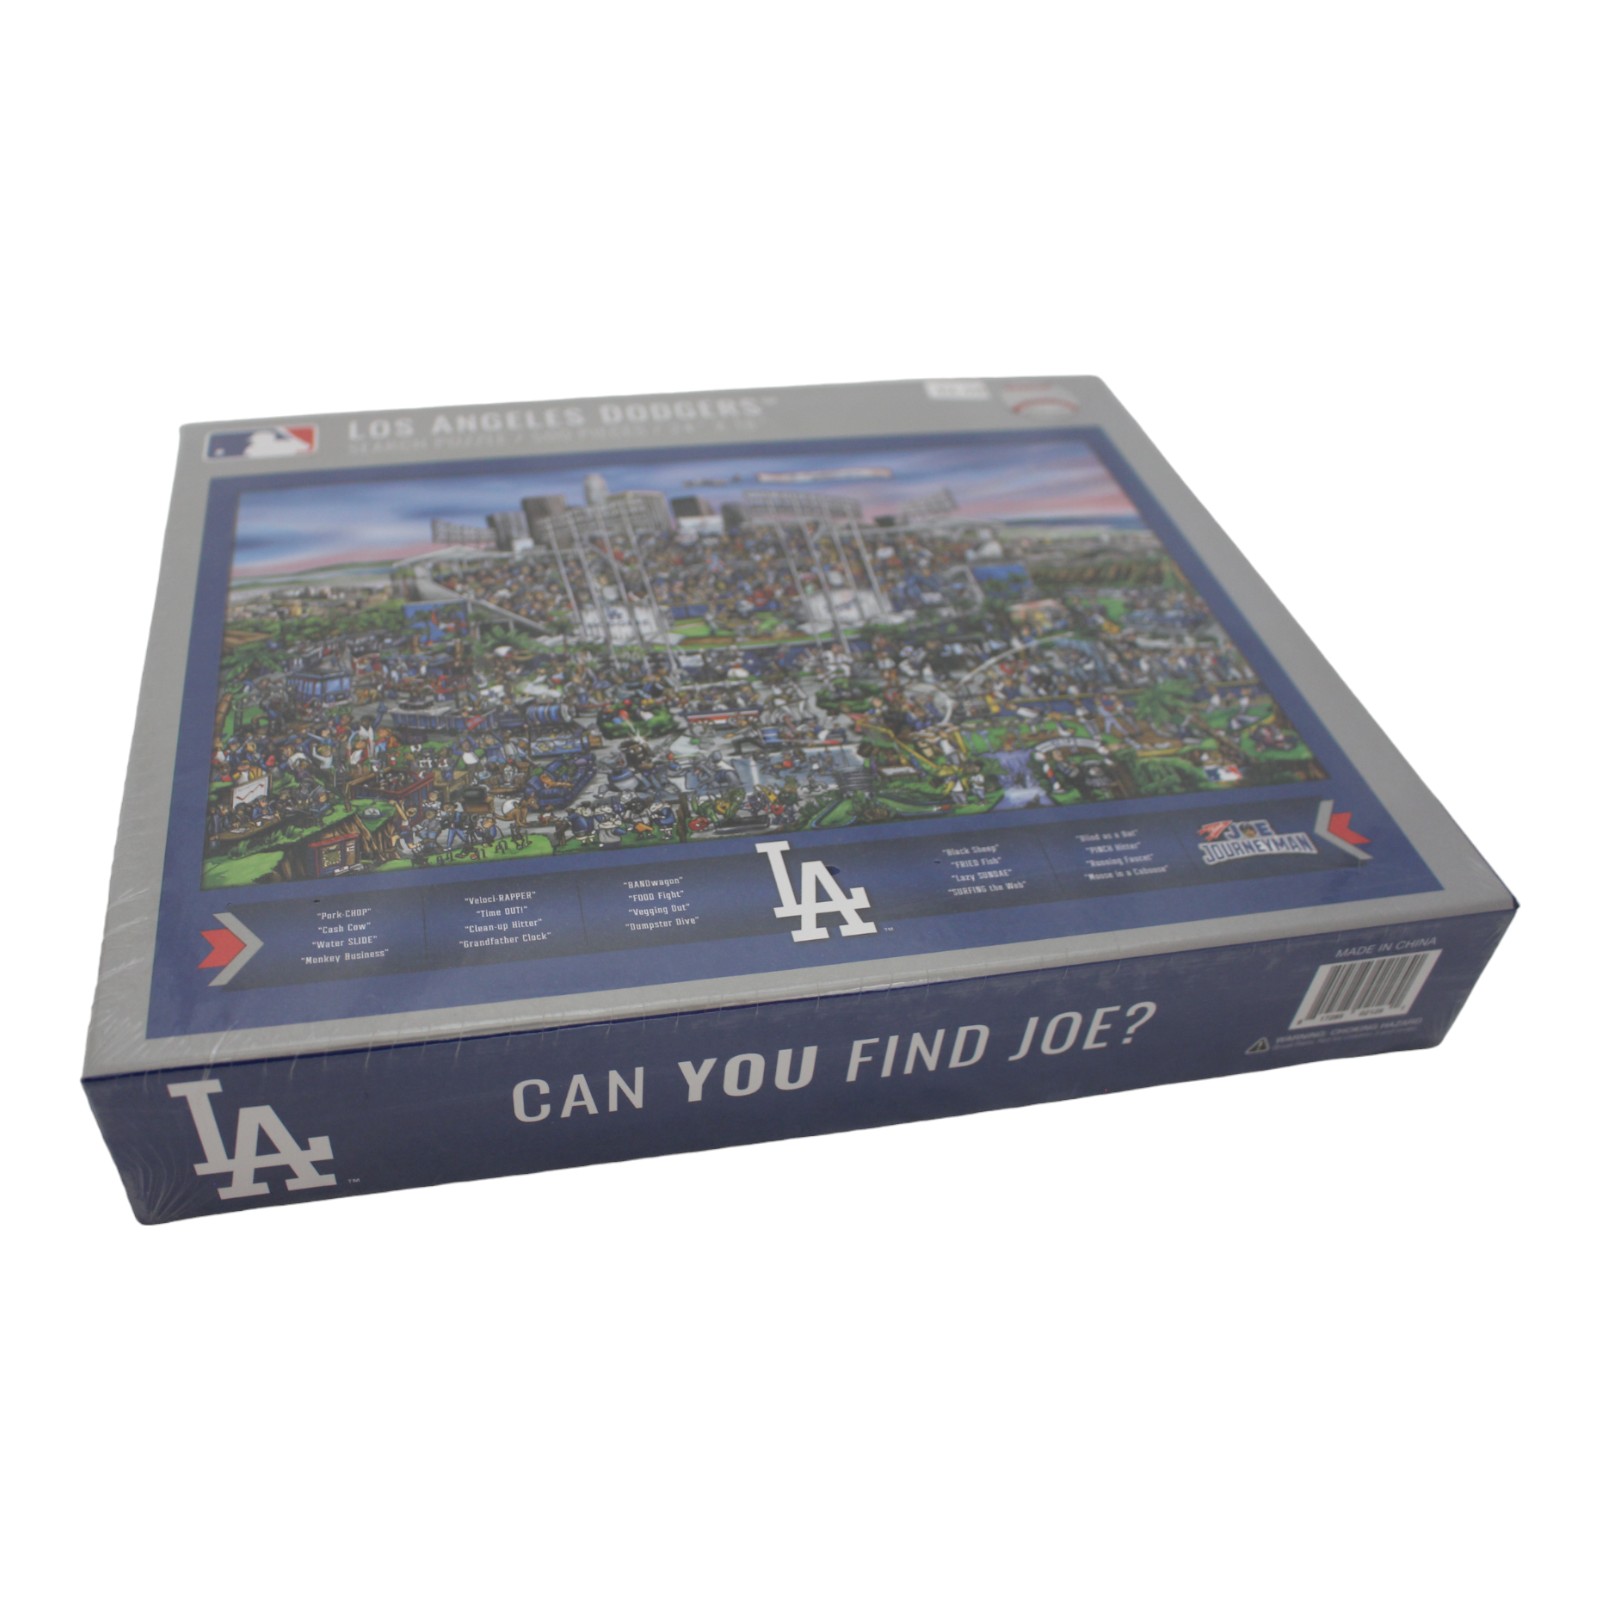 Los Angeles Dodgers 18"x24" YouTheFan 500 Piece Joe Journeyman Puzzle